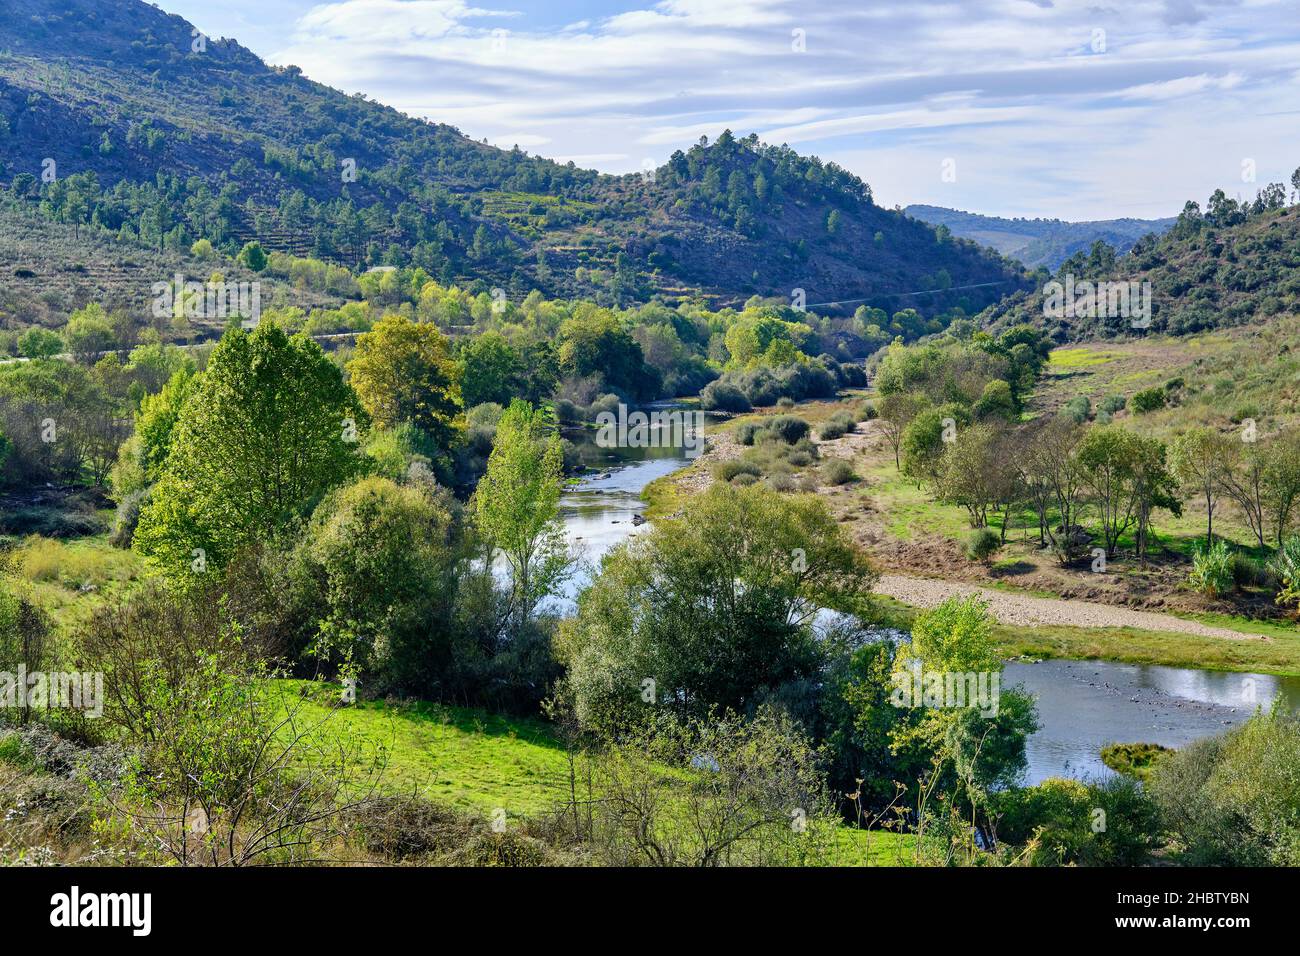 Der Tua-Fluss bei Cachao im Herbst. Regionaler Naturpark von Tale do Tua, Mirandela. Portugal Stockfoto